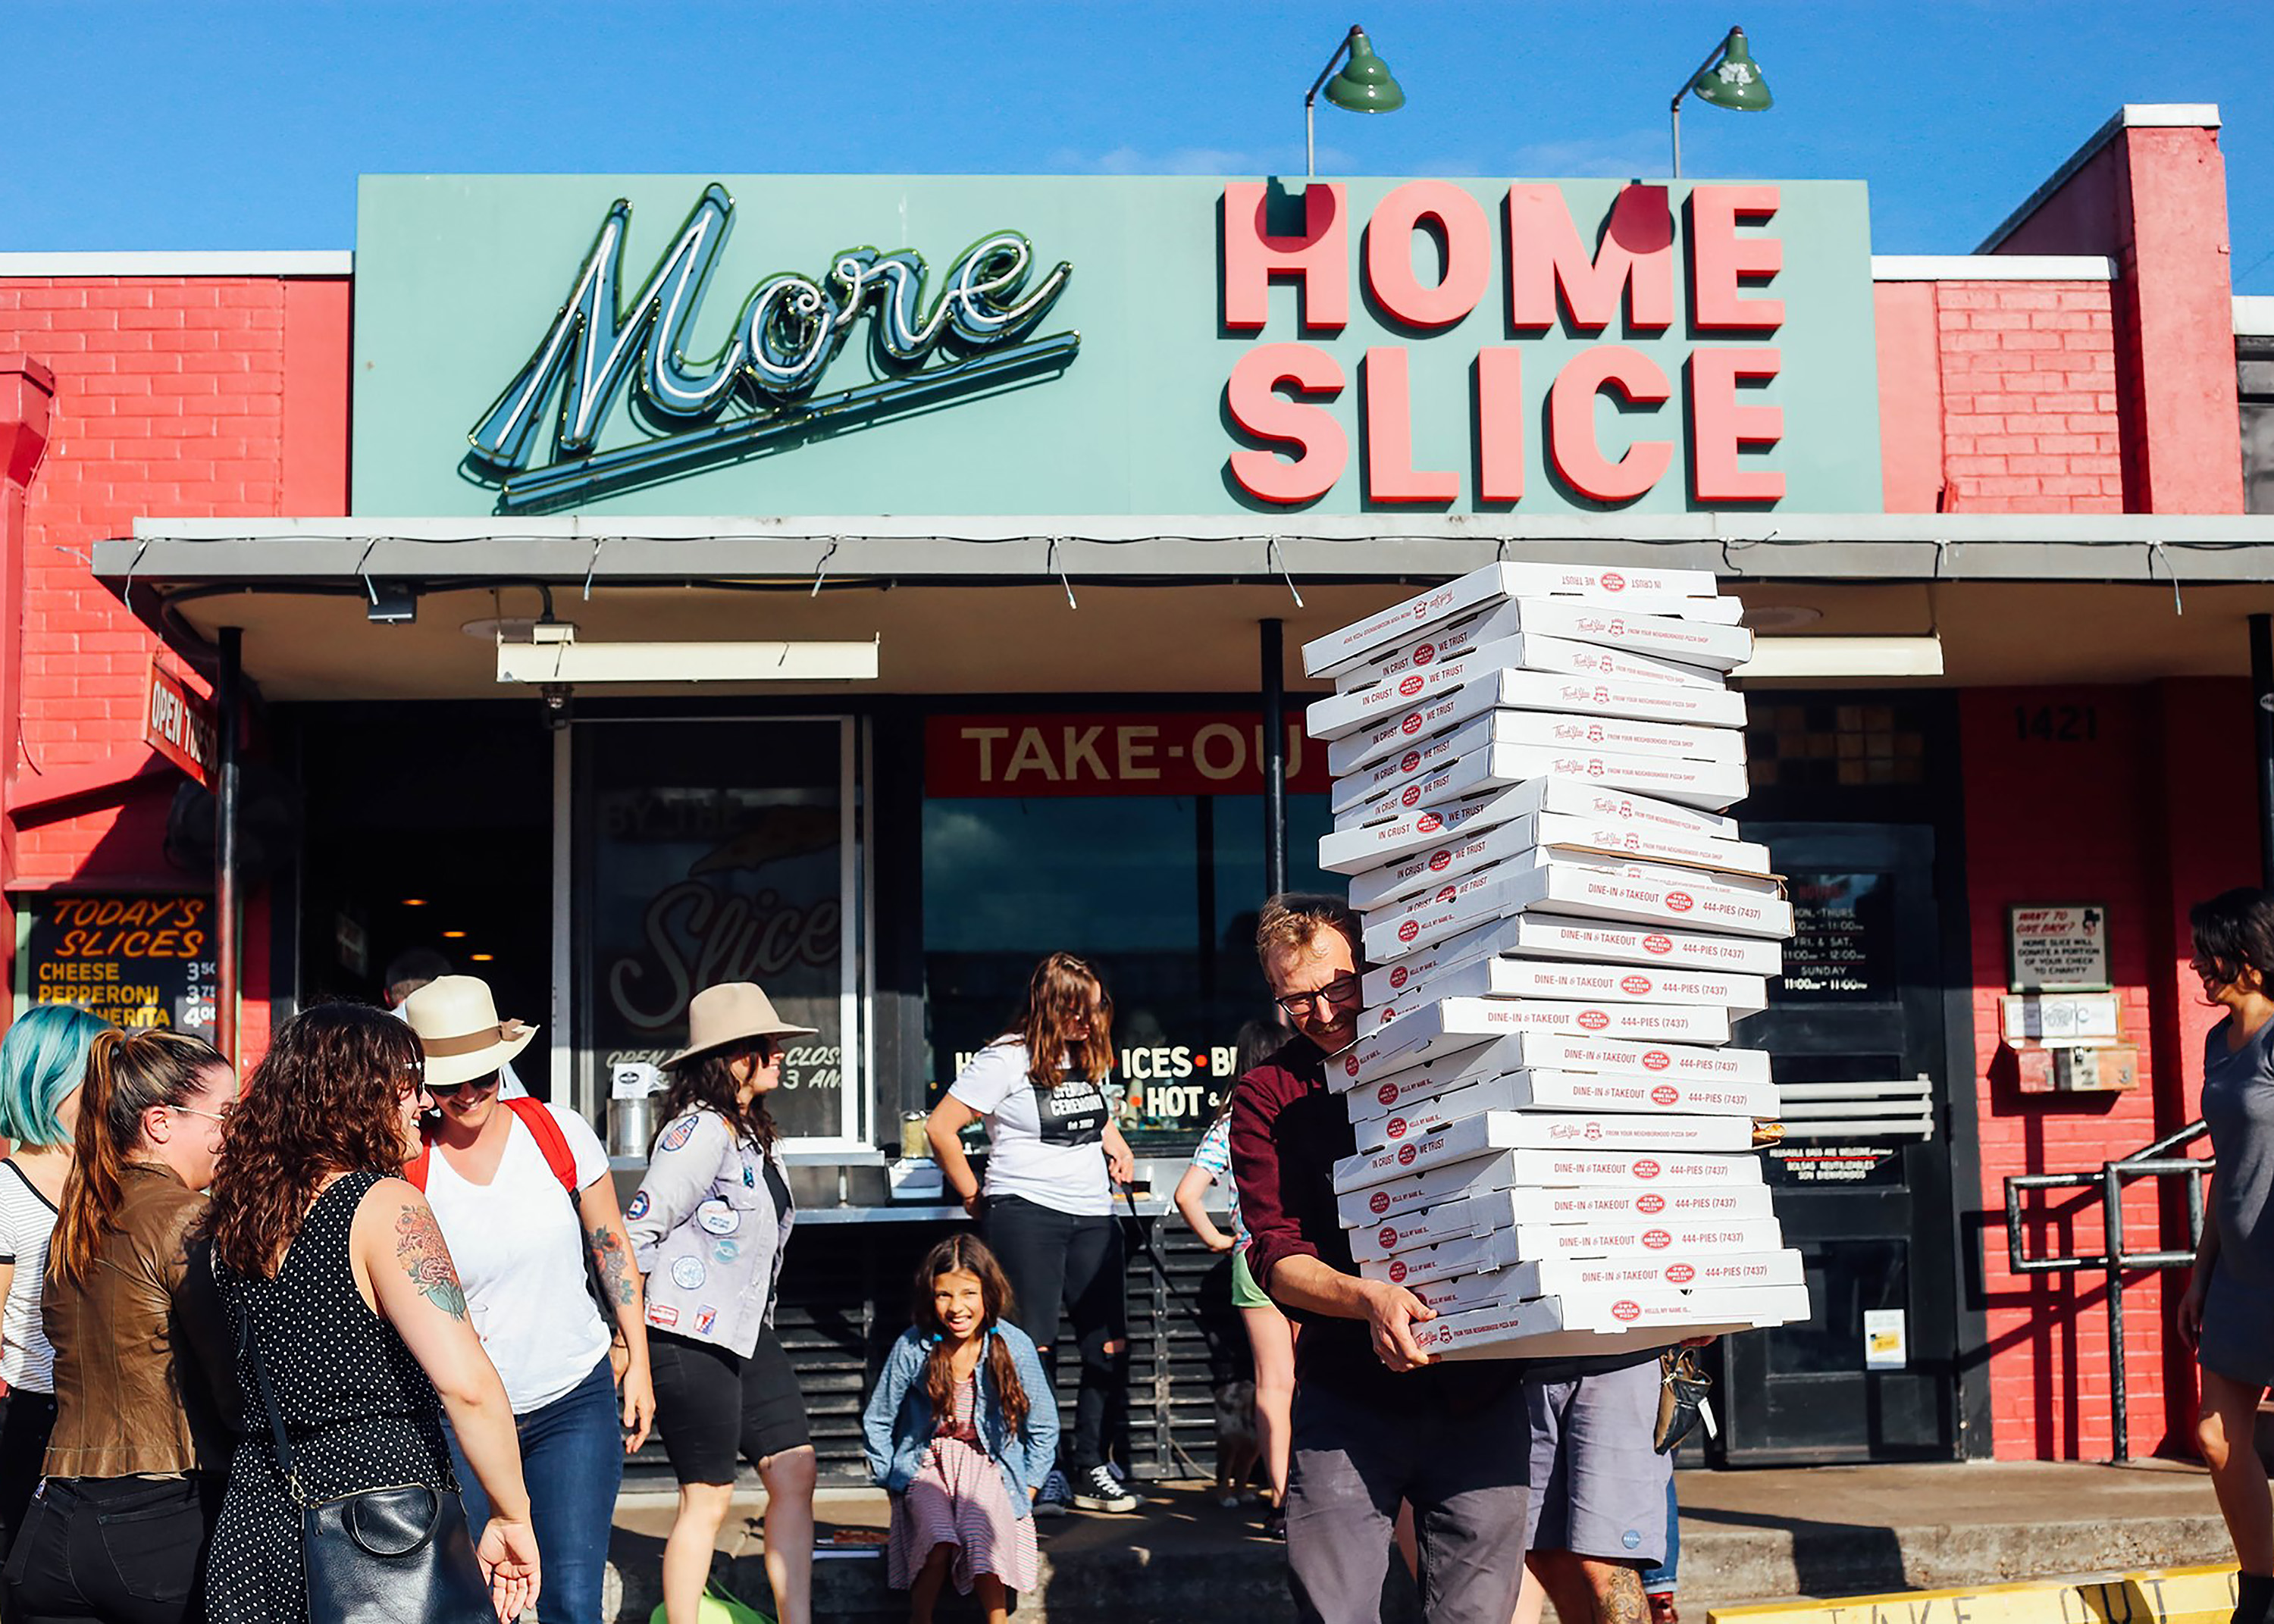 Home Slice Pizza storefront